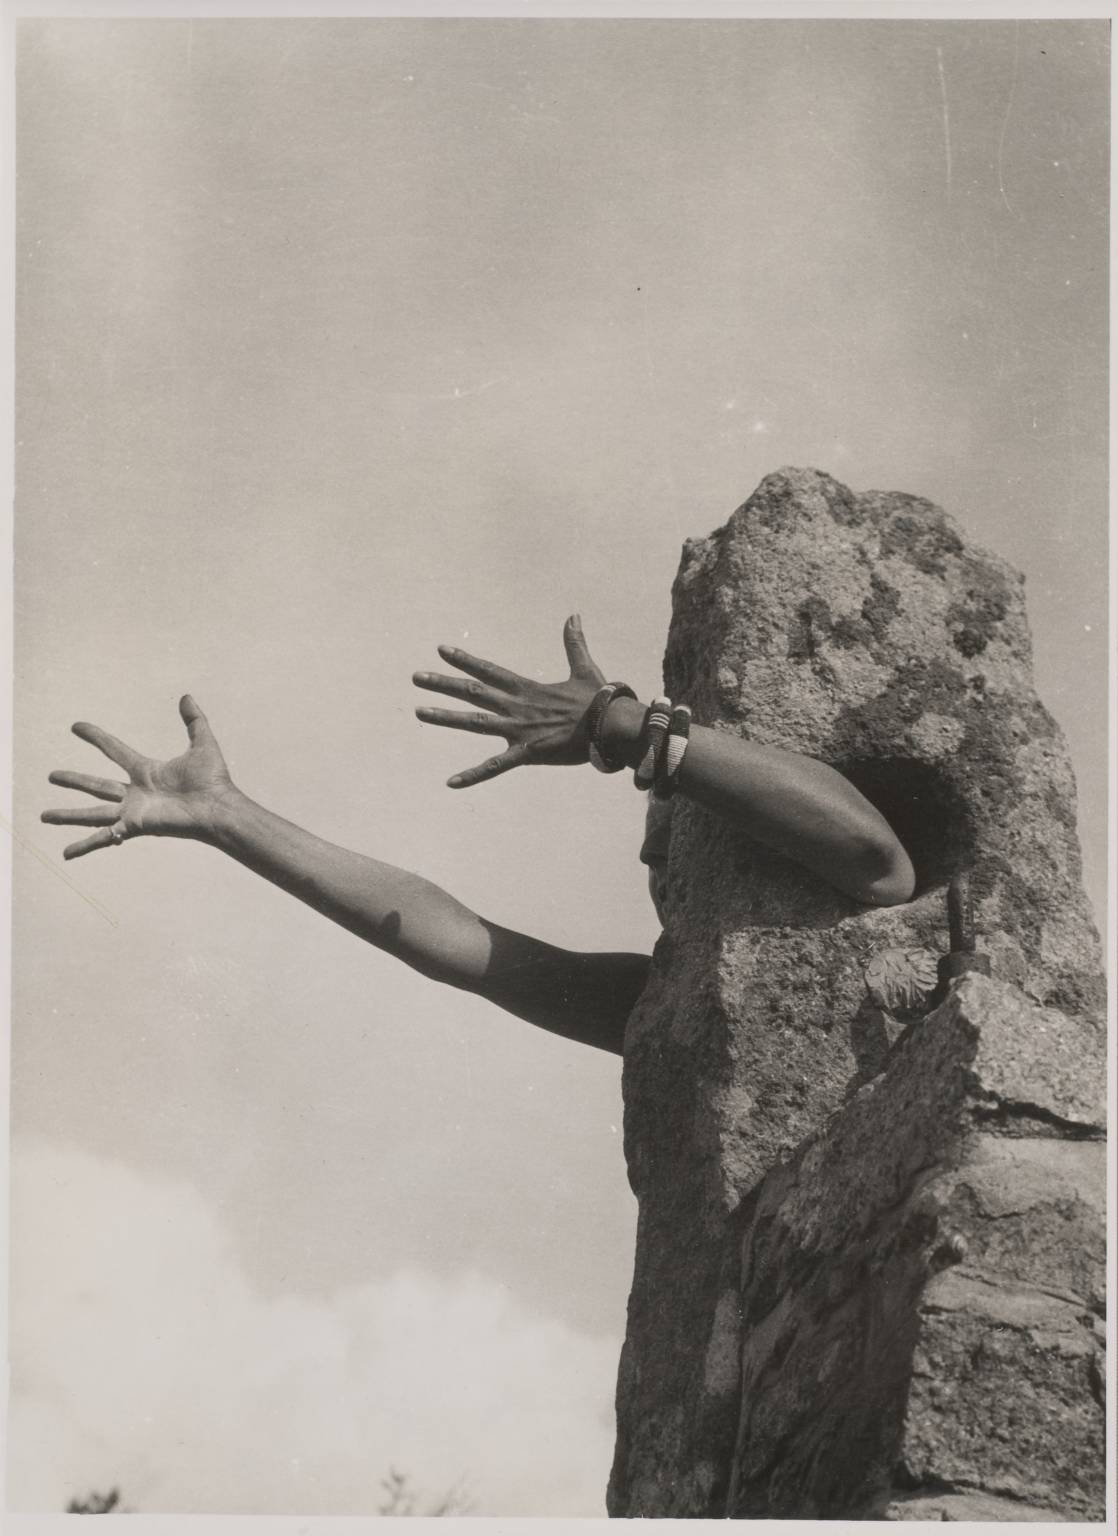 Claude Cahun, I Extend My Arms, 1931-32